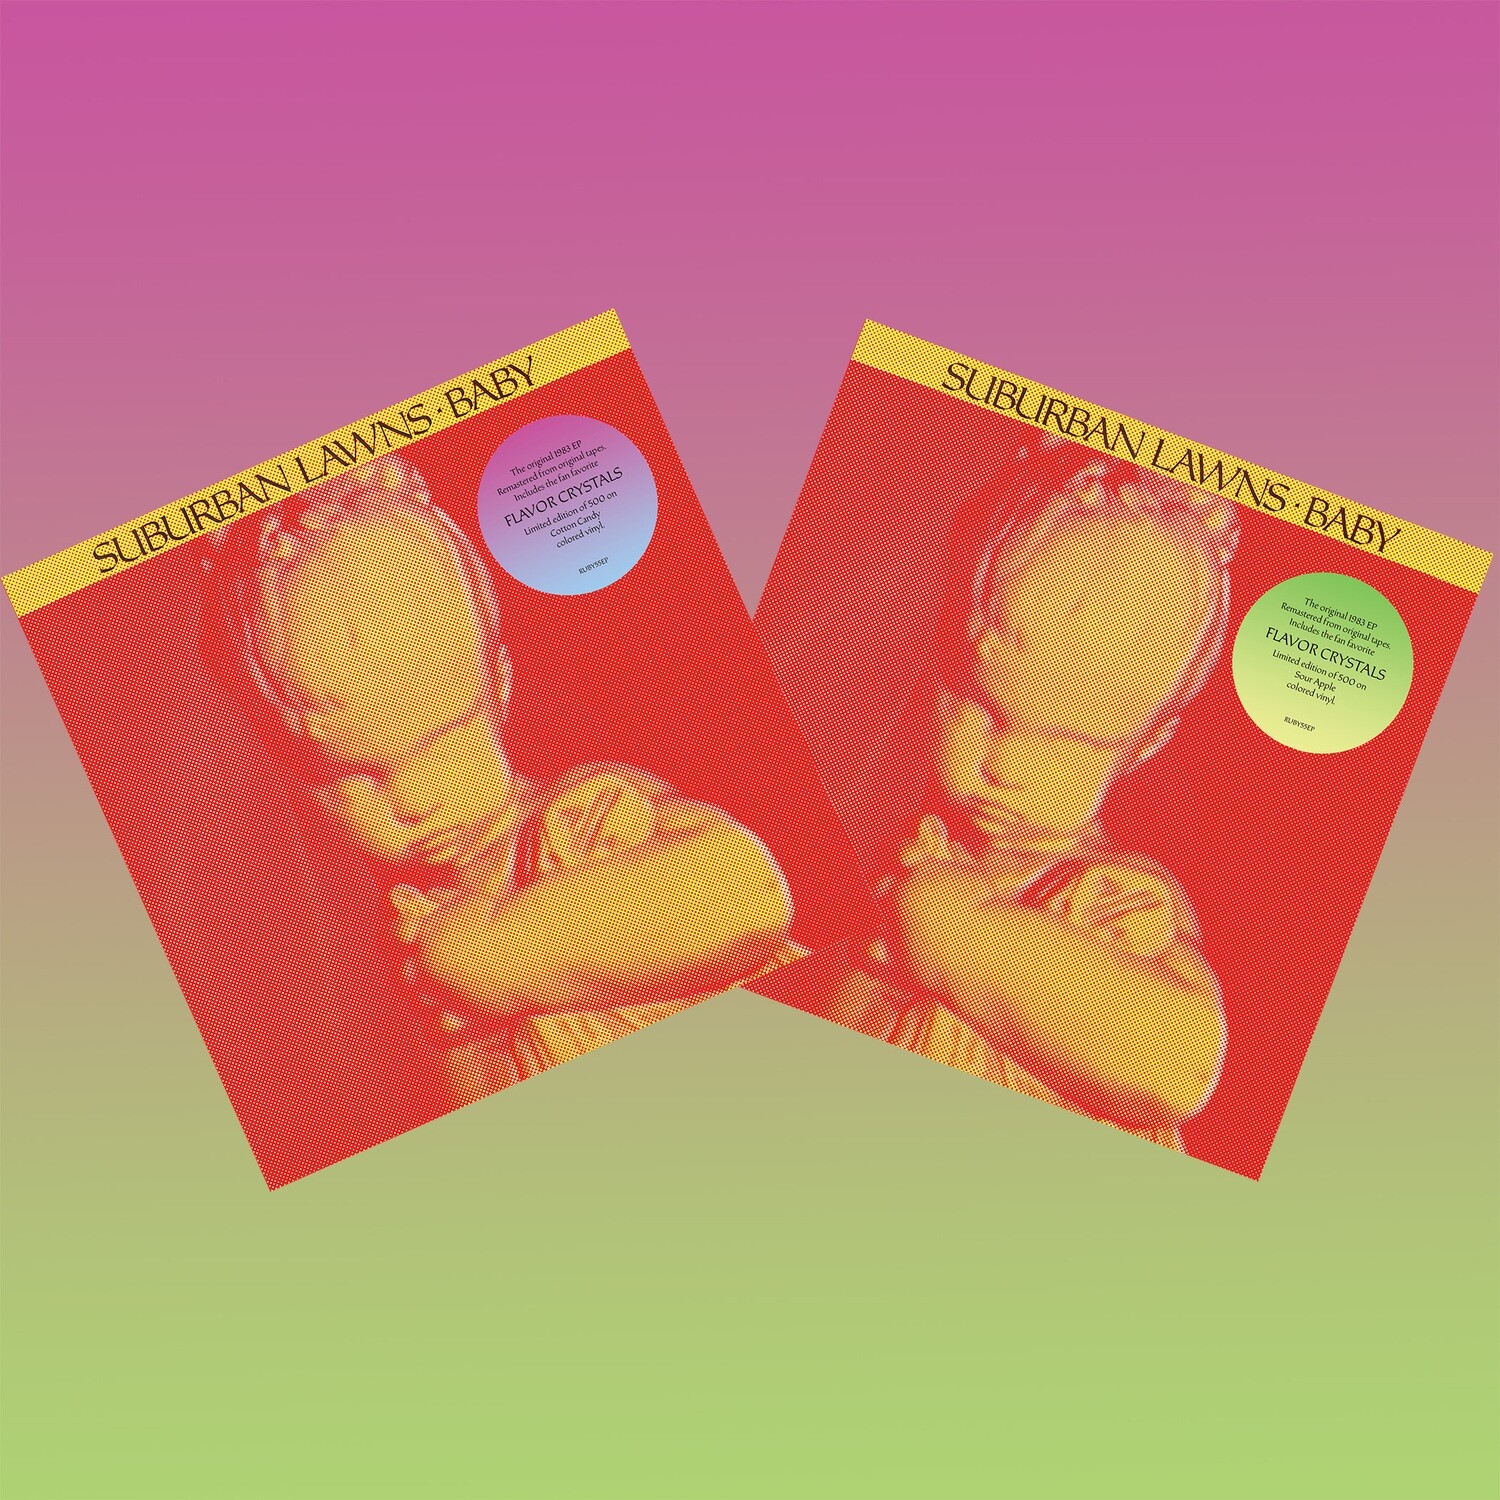 Suburban Lawns / Baby EP 2-pack: Cotton Candy + Sour Apple vinyl